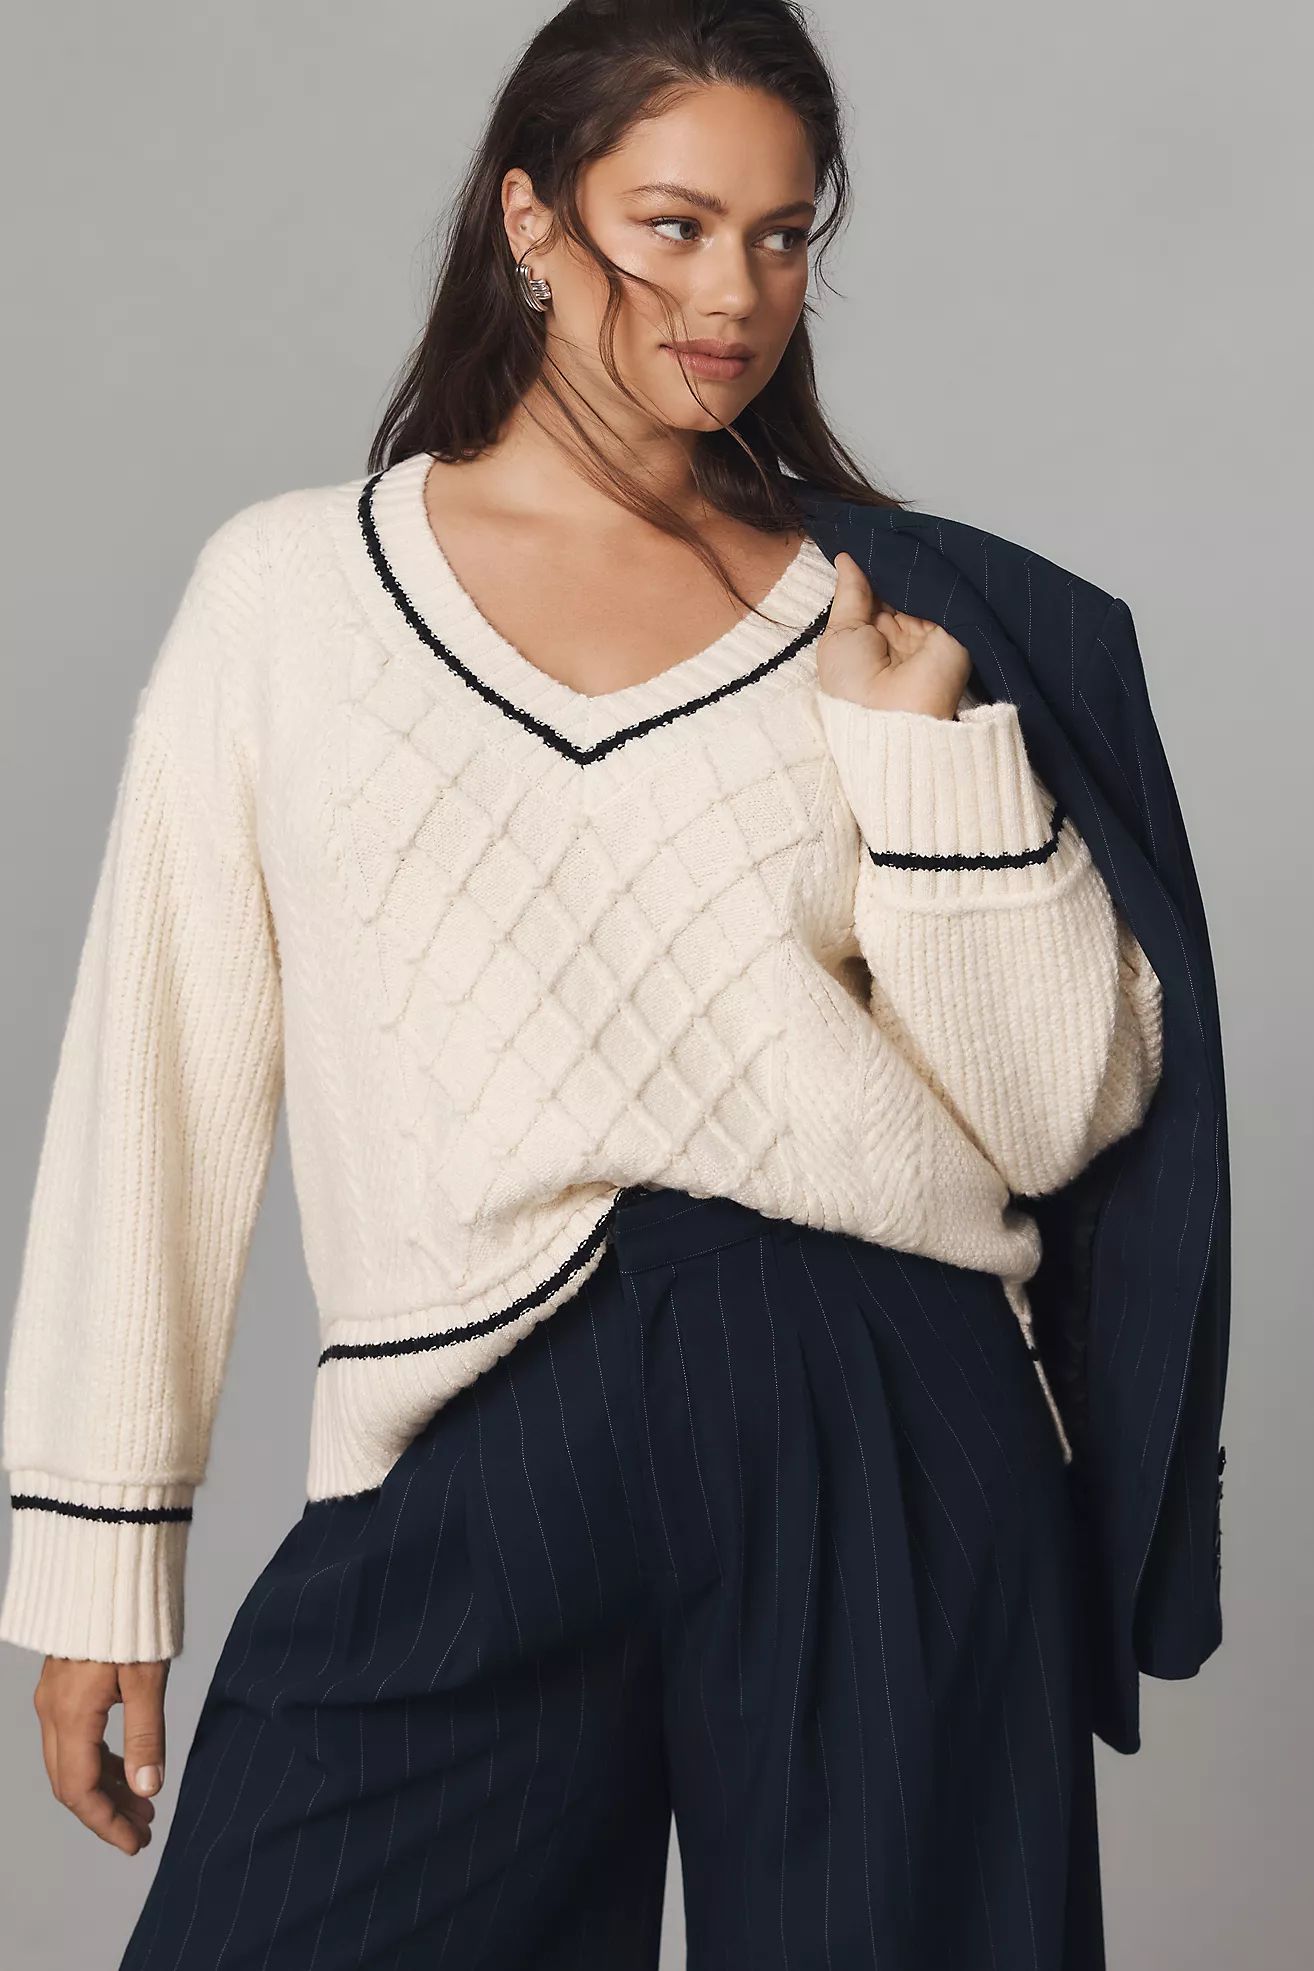 The Tillie V-Neck Pullover Sweater by Maeve | Anthropologie (US)